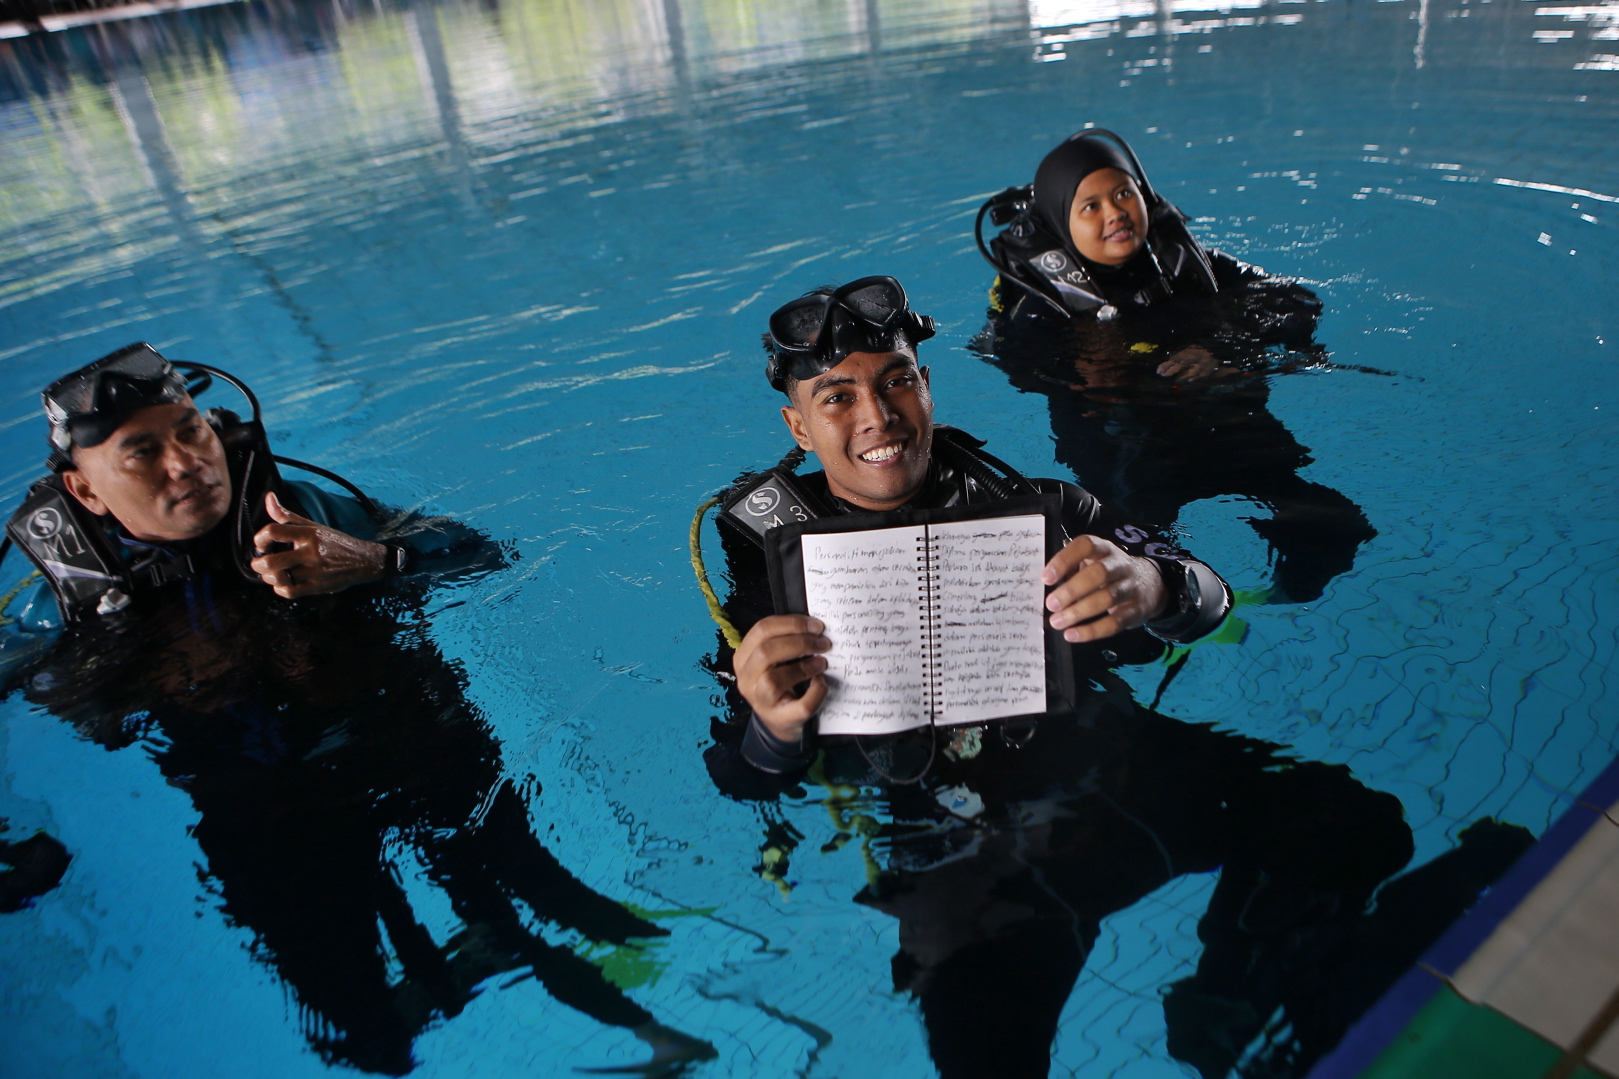 Ahmad fudhail ahmad kenedi showing essay he wrote while underwater